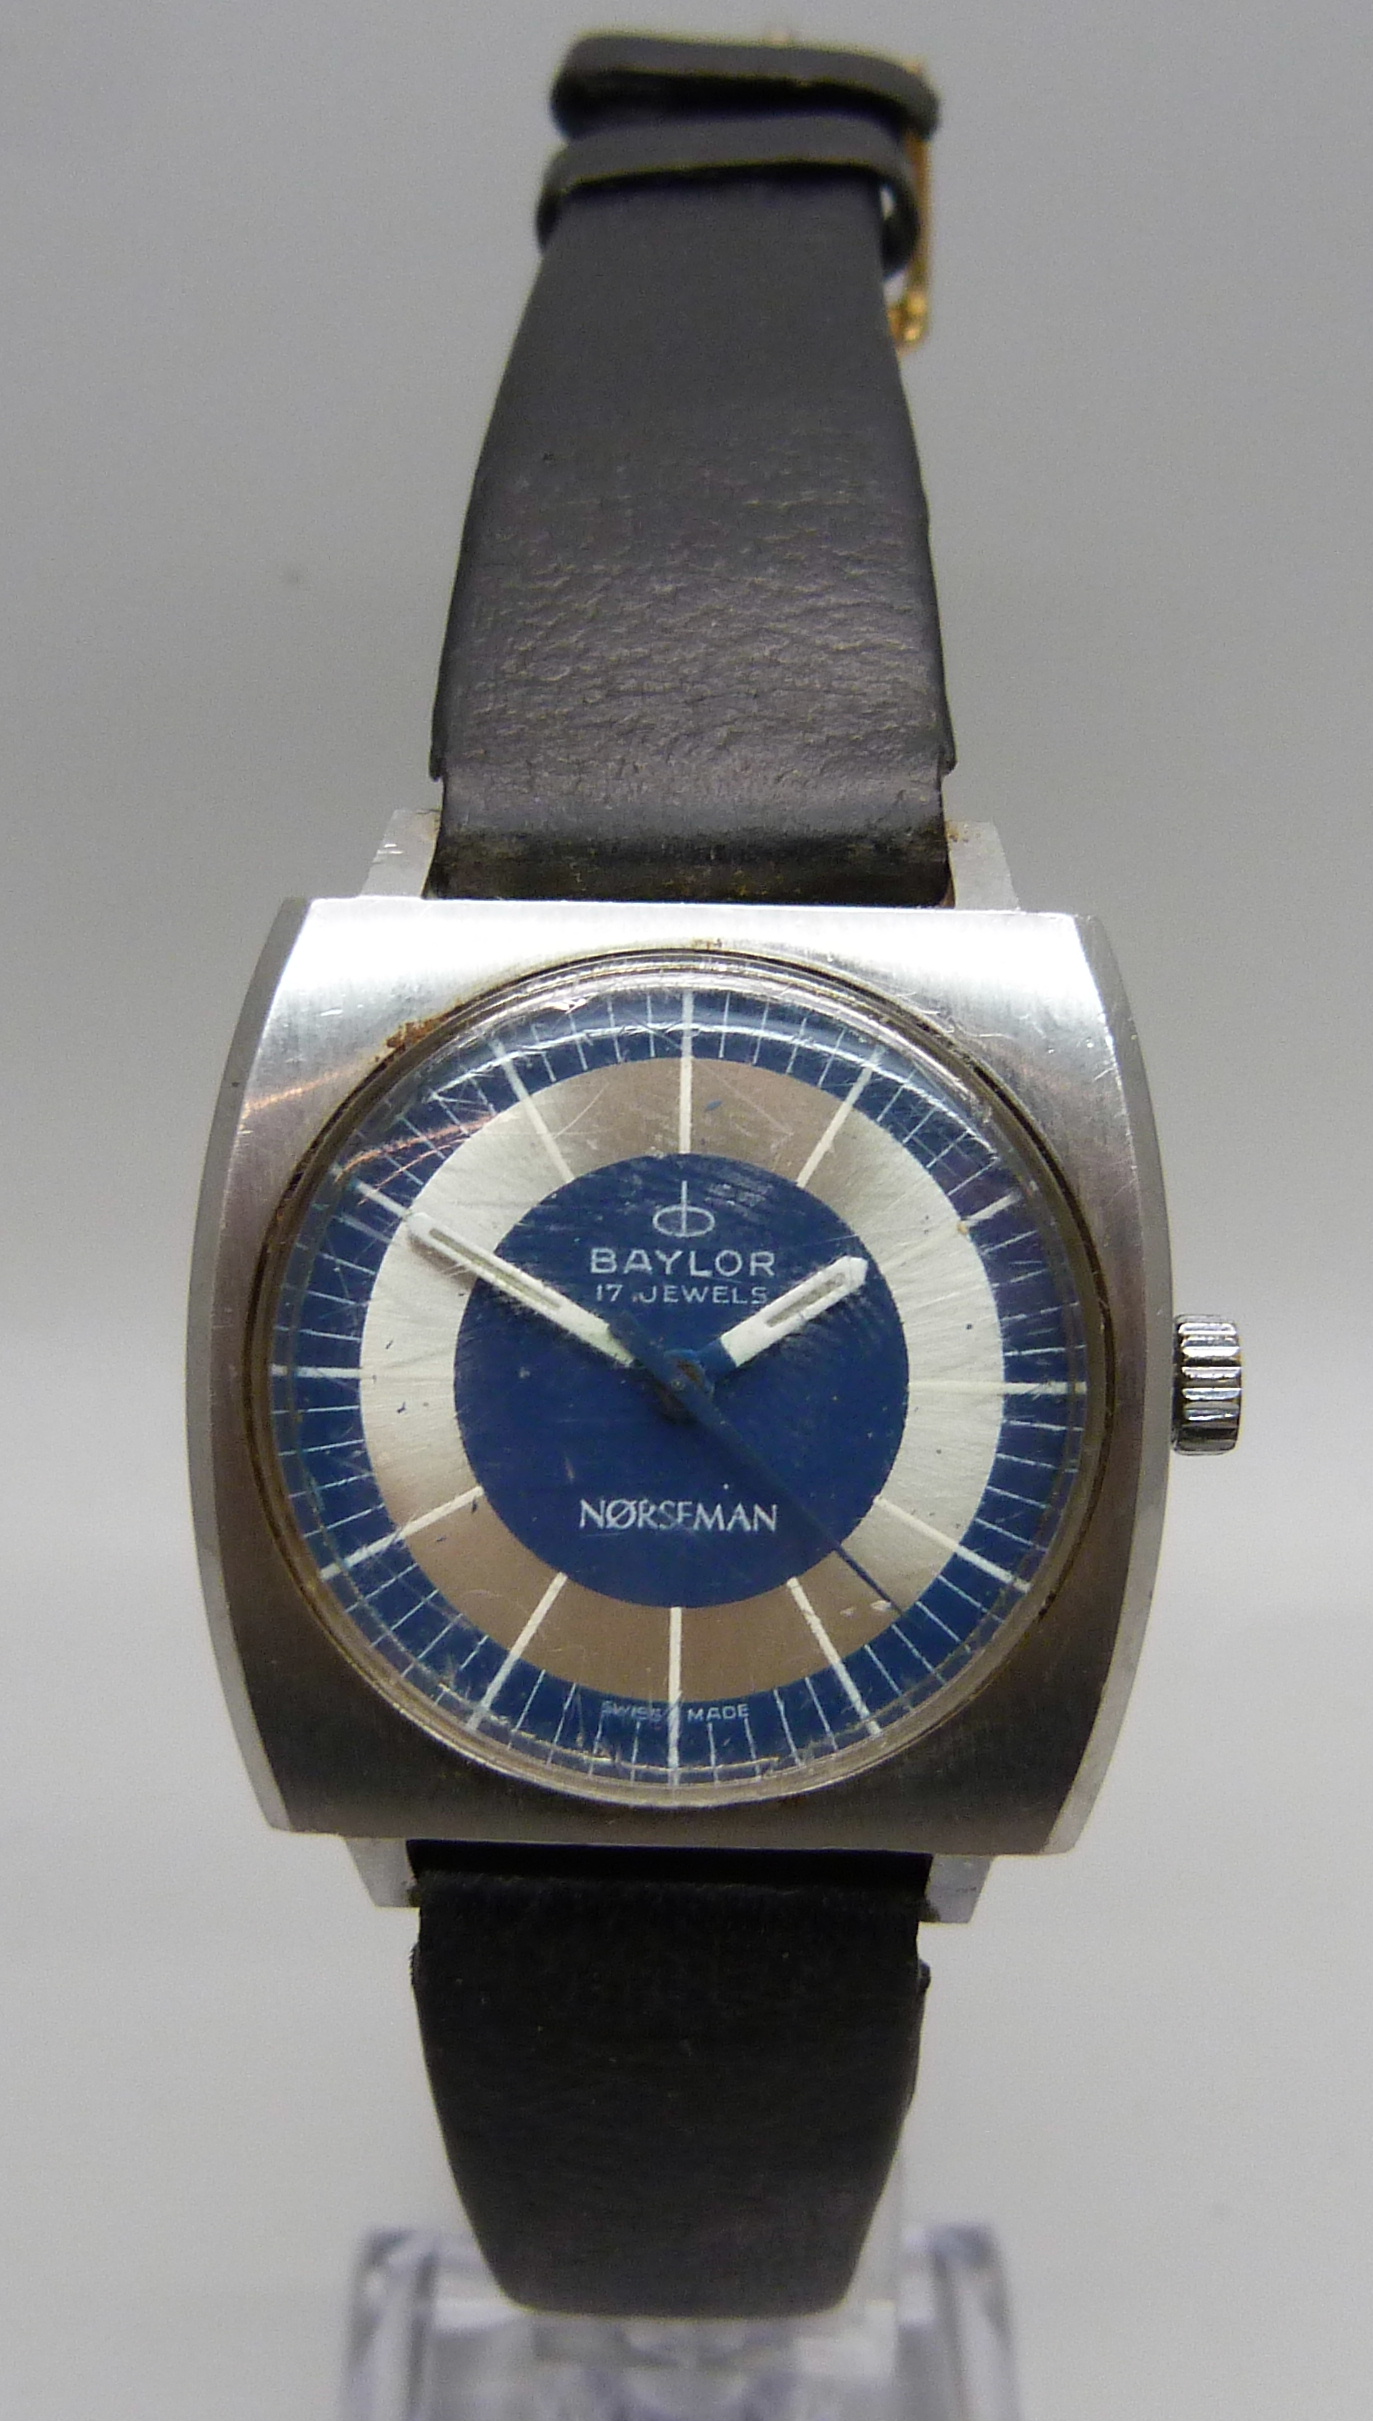 A 1970's Baylor Norseman, Swiss made, 17 jewel movement wristwatch